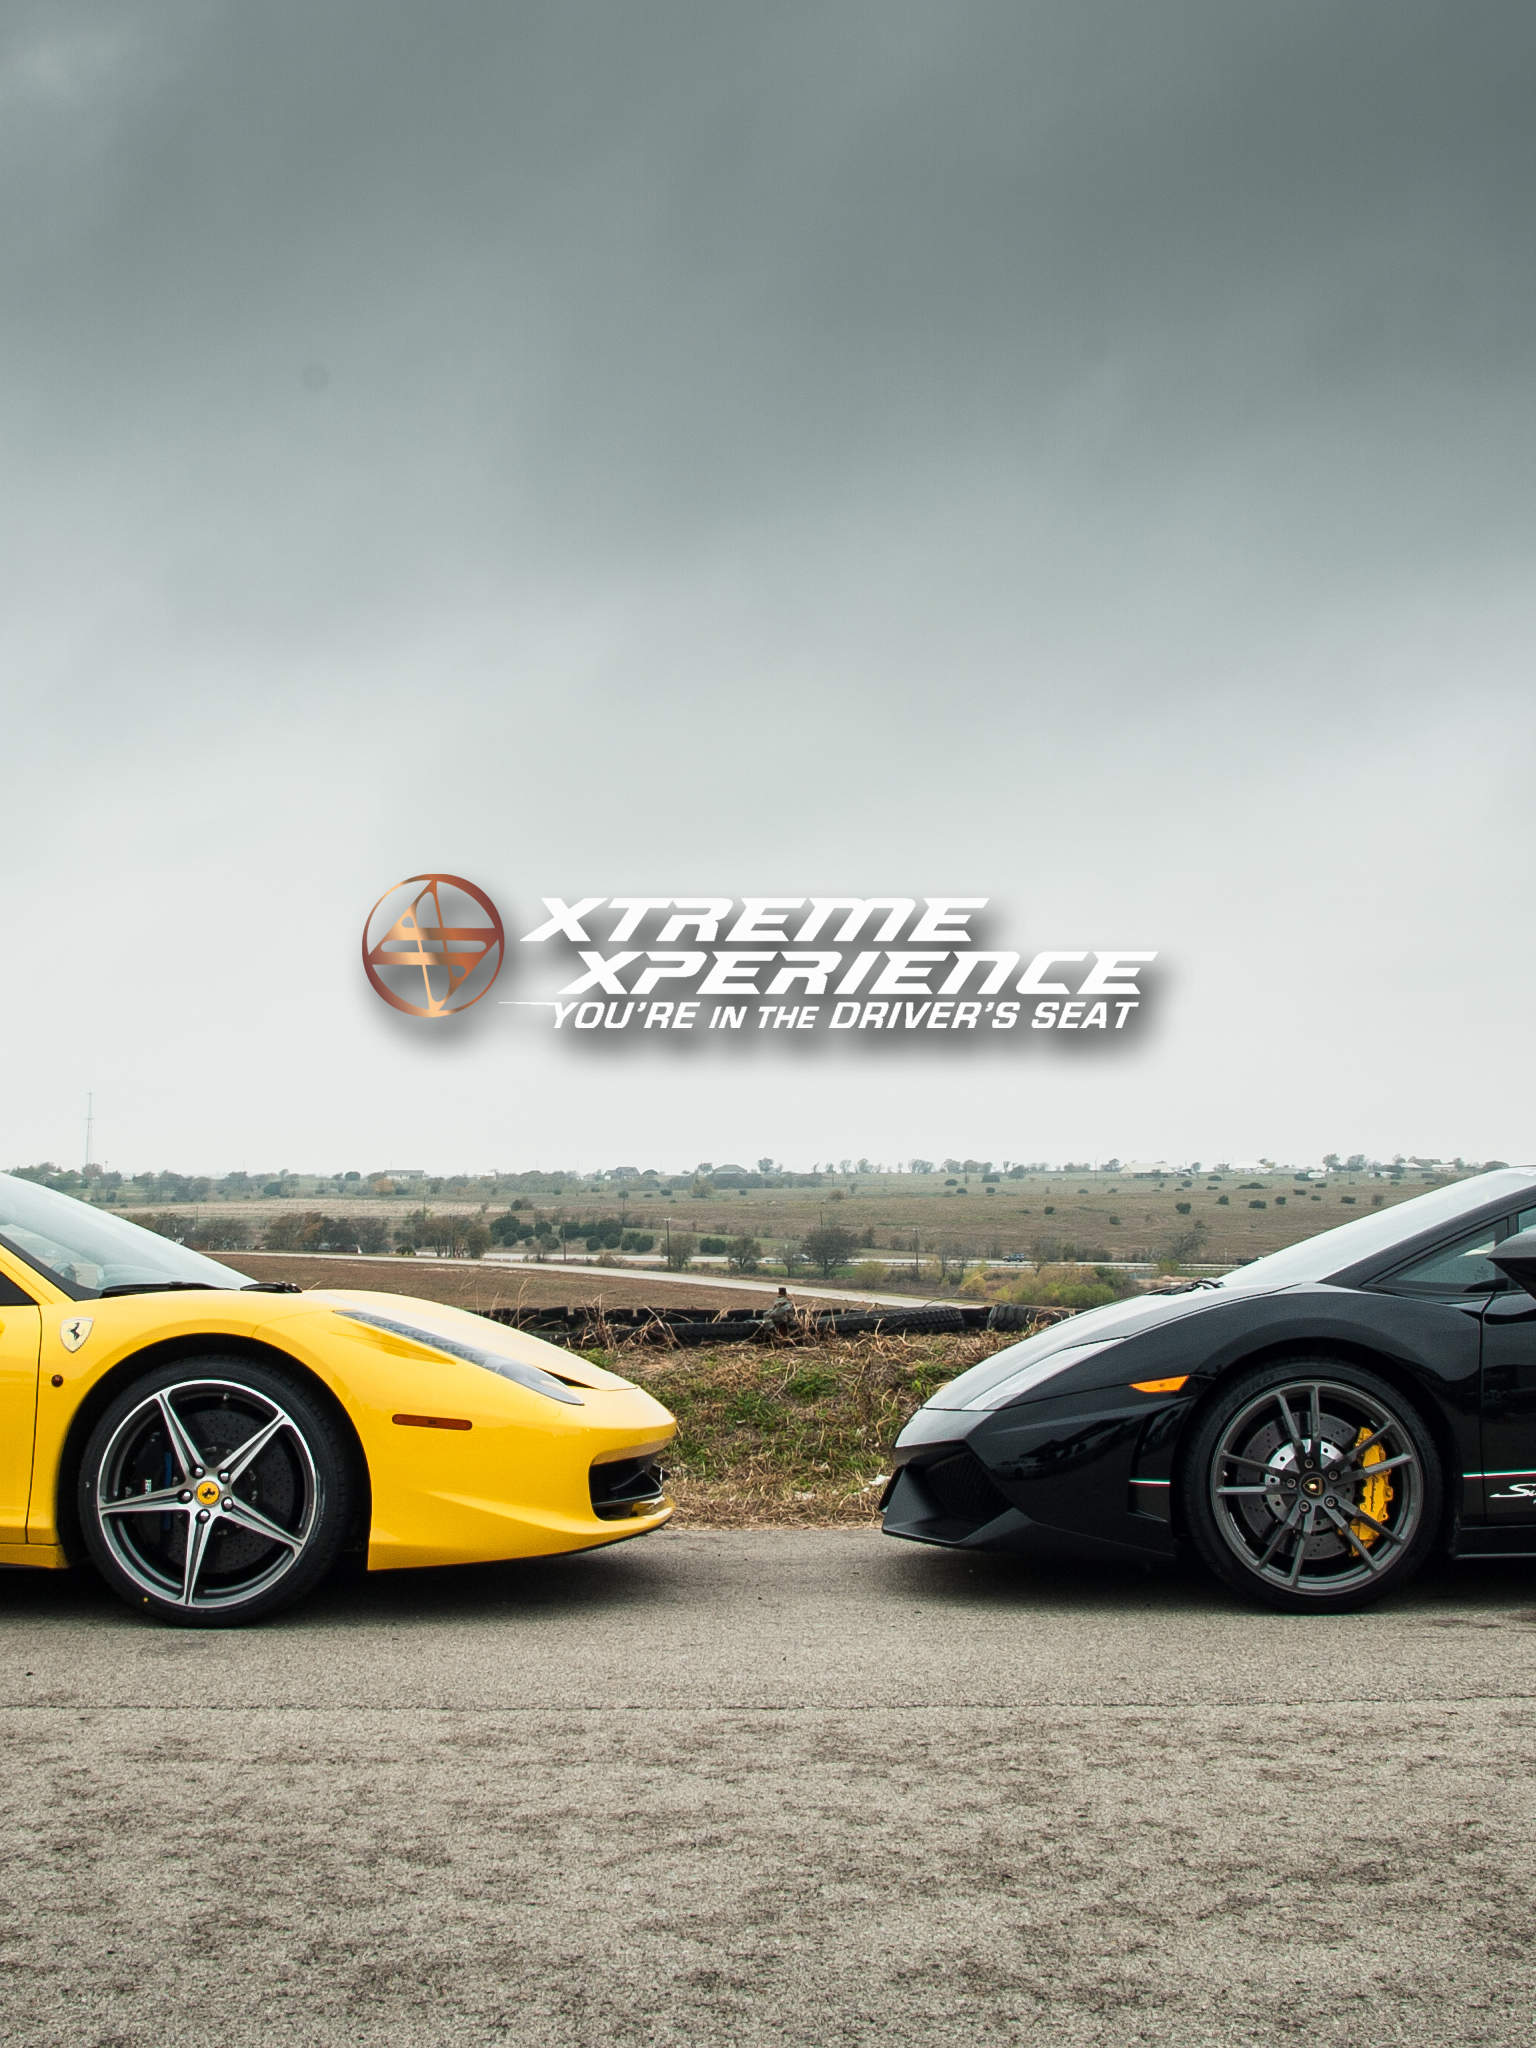 Ferrari Vs. Lamborghini iPad wallpaper from Xtreme Xperience